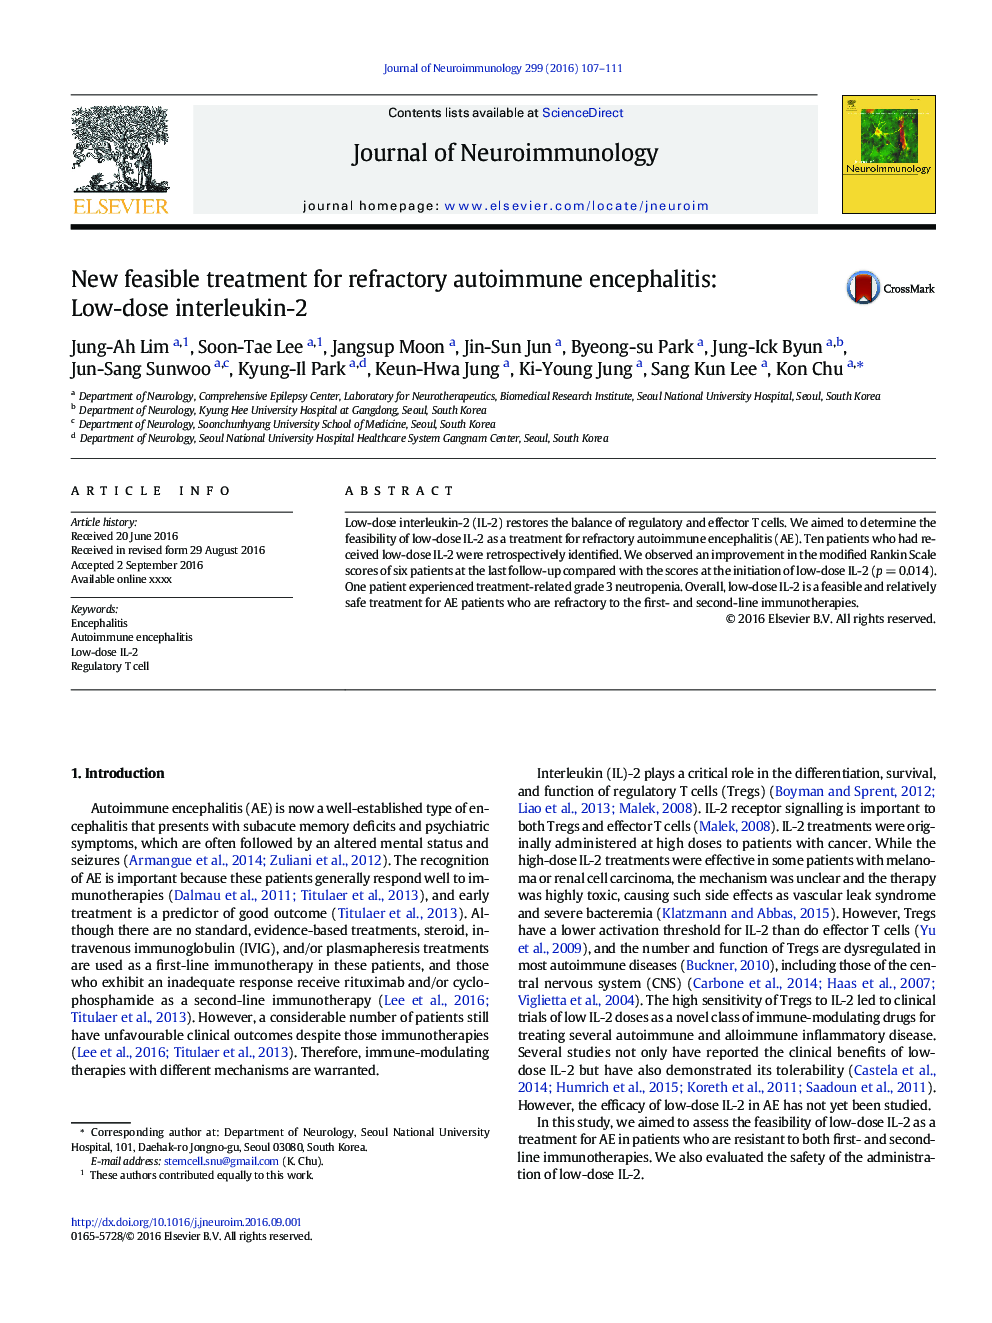 New feasible treatment for refractory autoimmune encephalitis: Low-dose interleukin-2